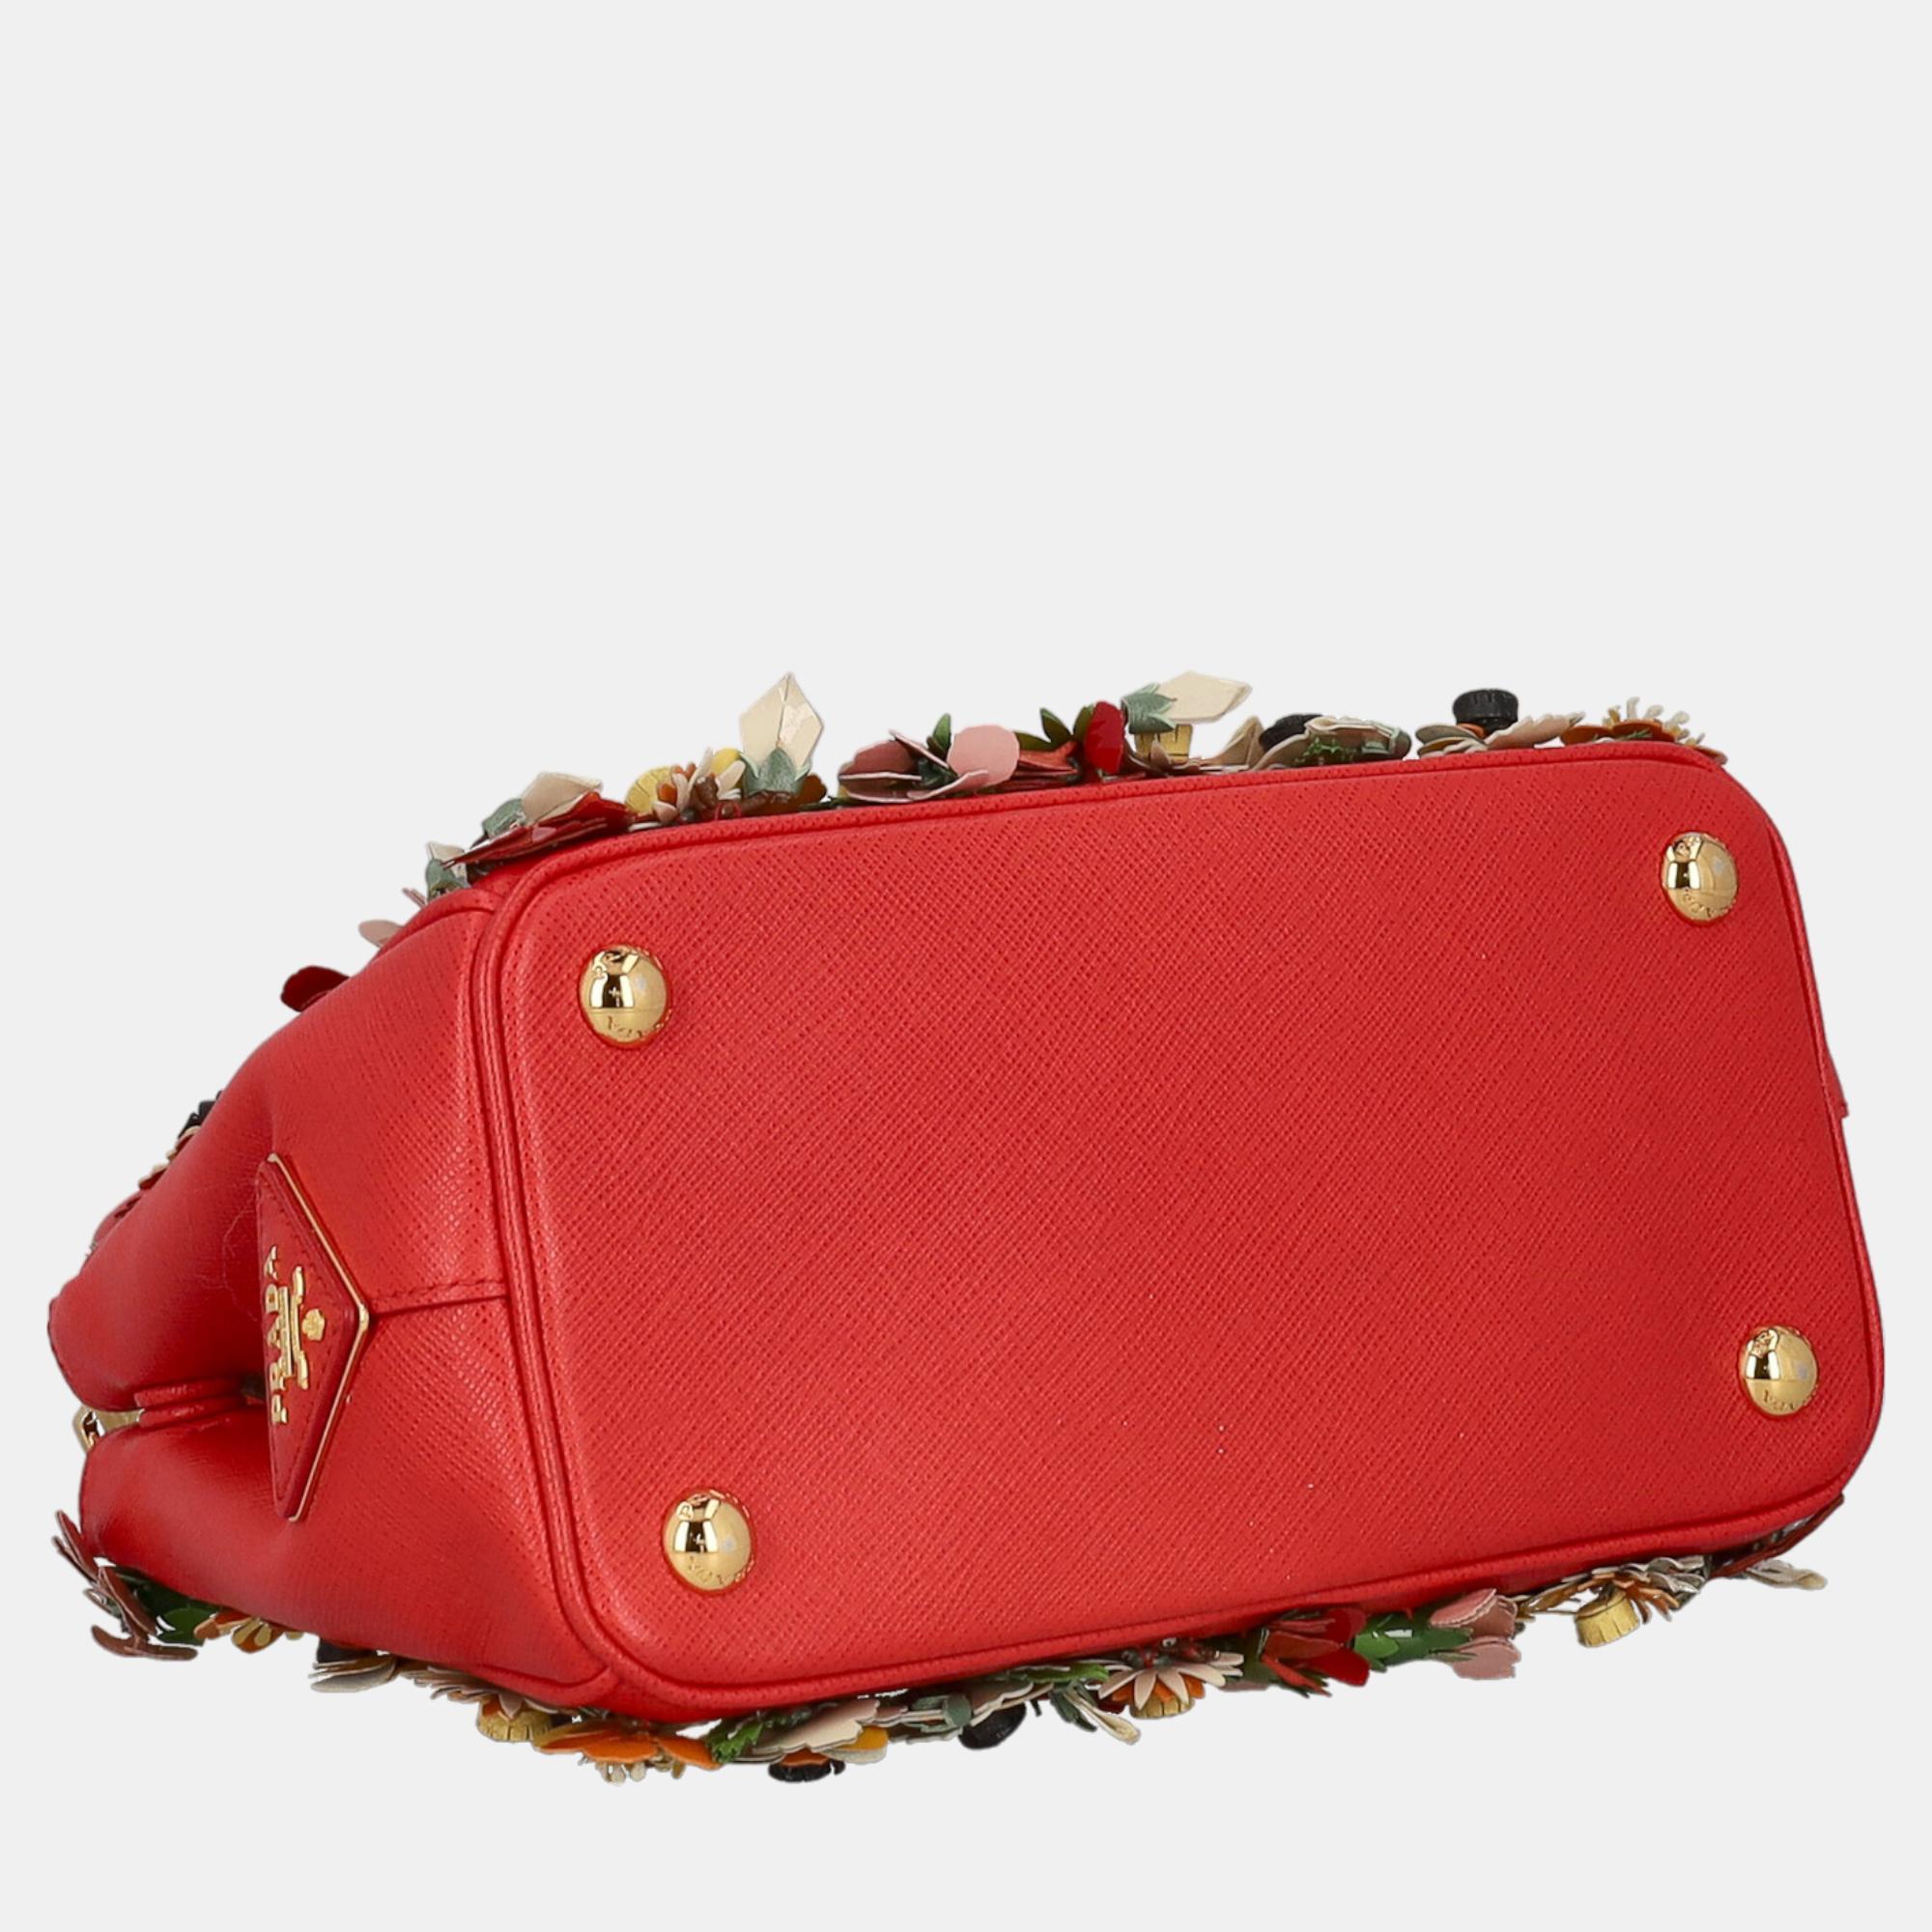 Prada  Women's Leather Handbag - Red - One Size